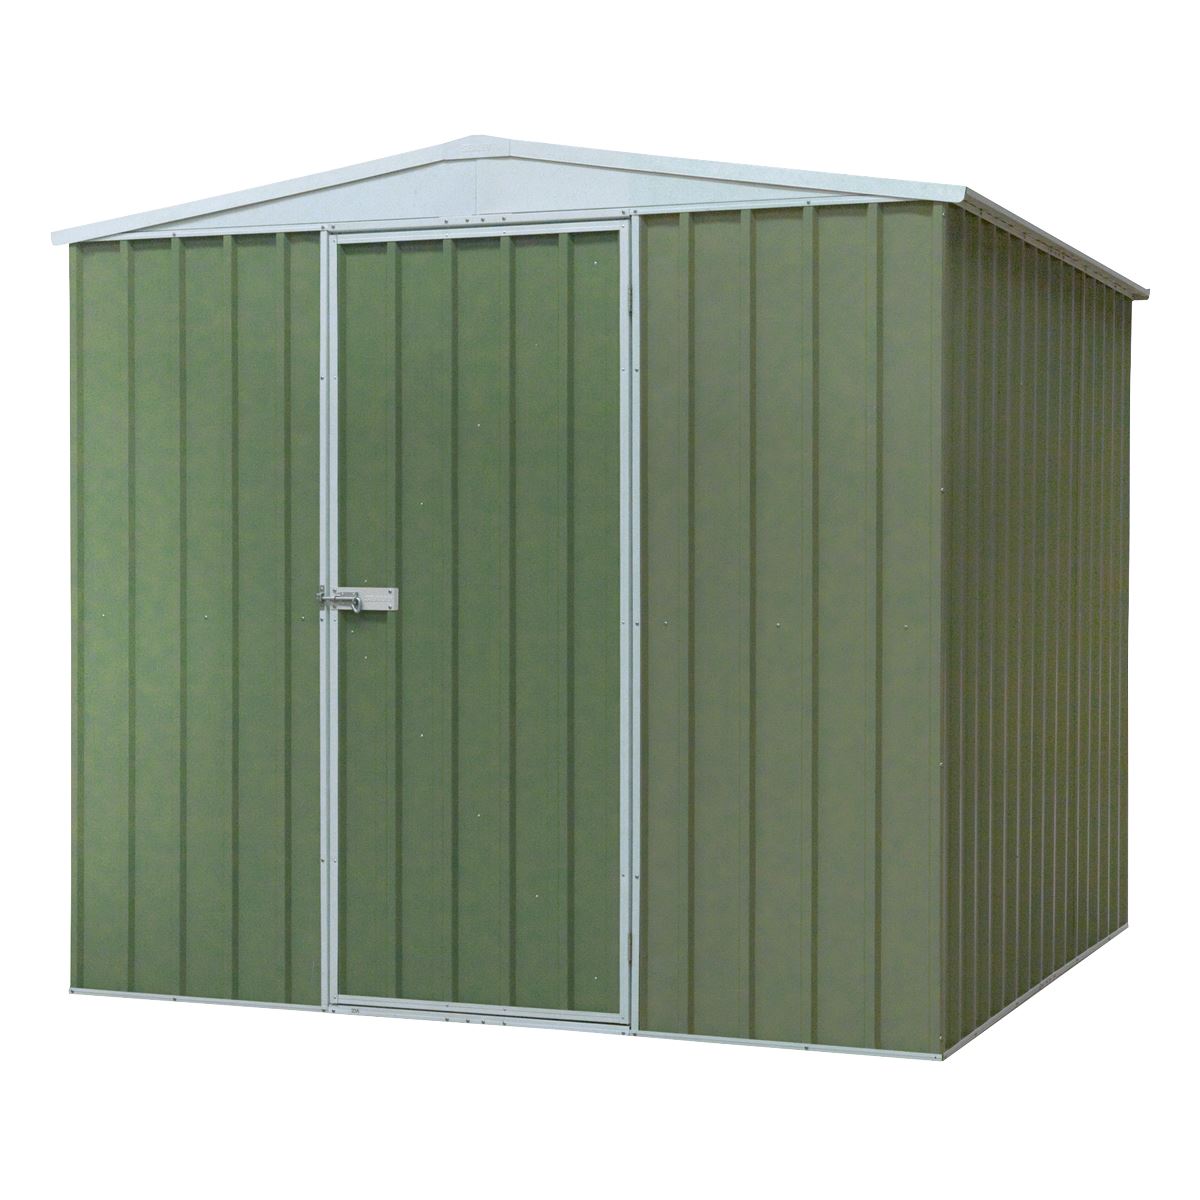 Dellonda Galvanised Steel Metal Garden/Outdoor/Storage Shed, 7.5FT x 7.5FT, Apex Style Roof - Green - DG115